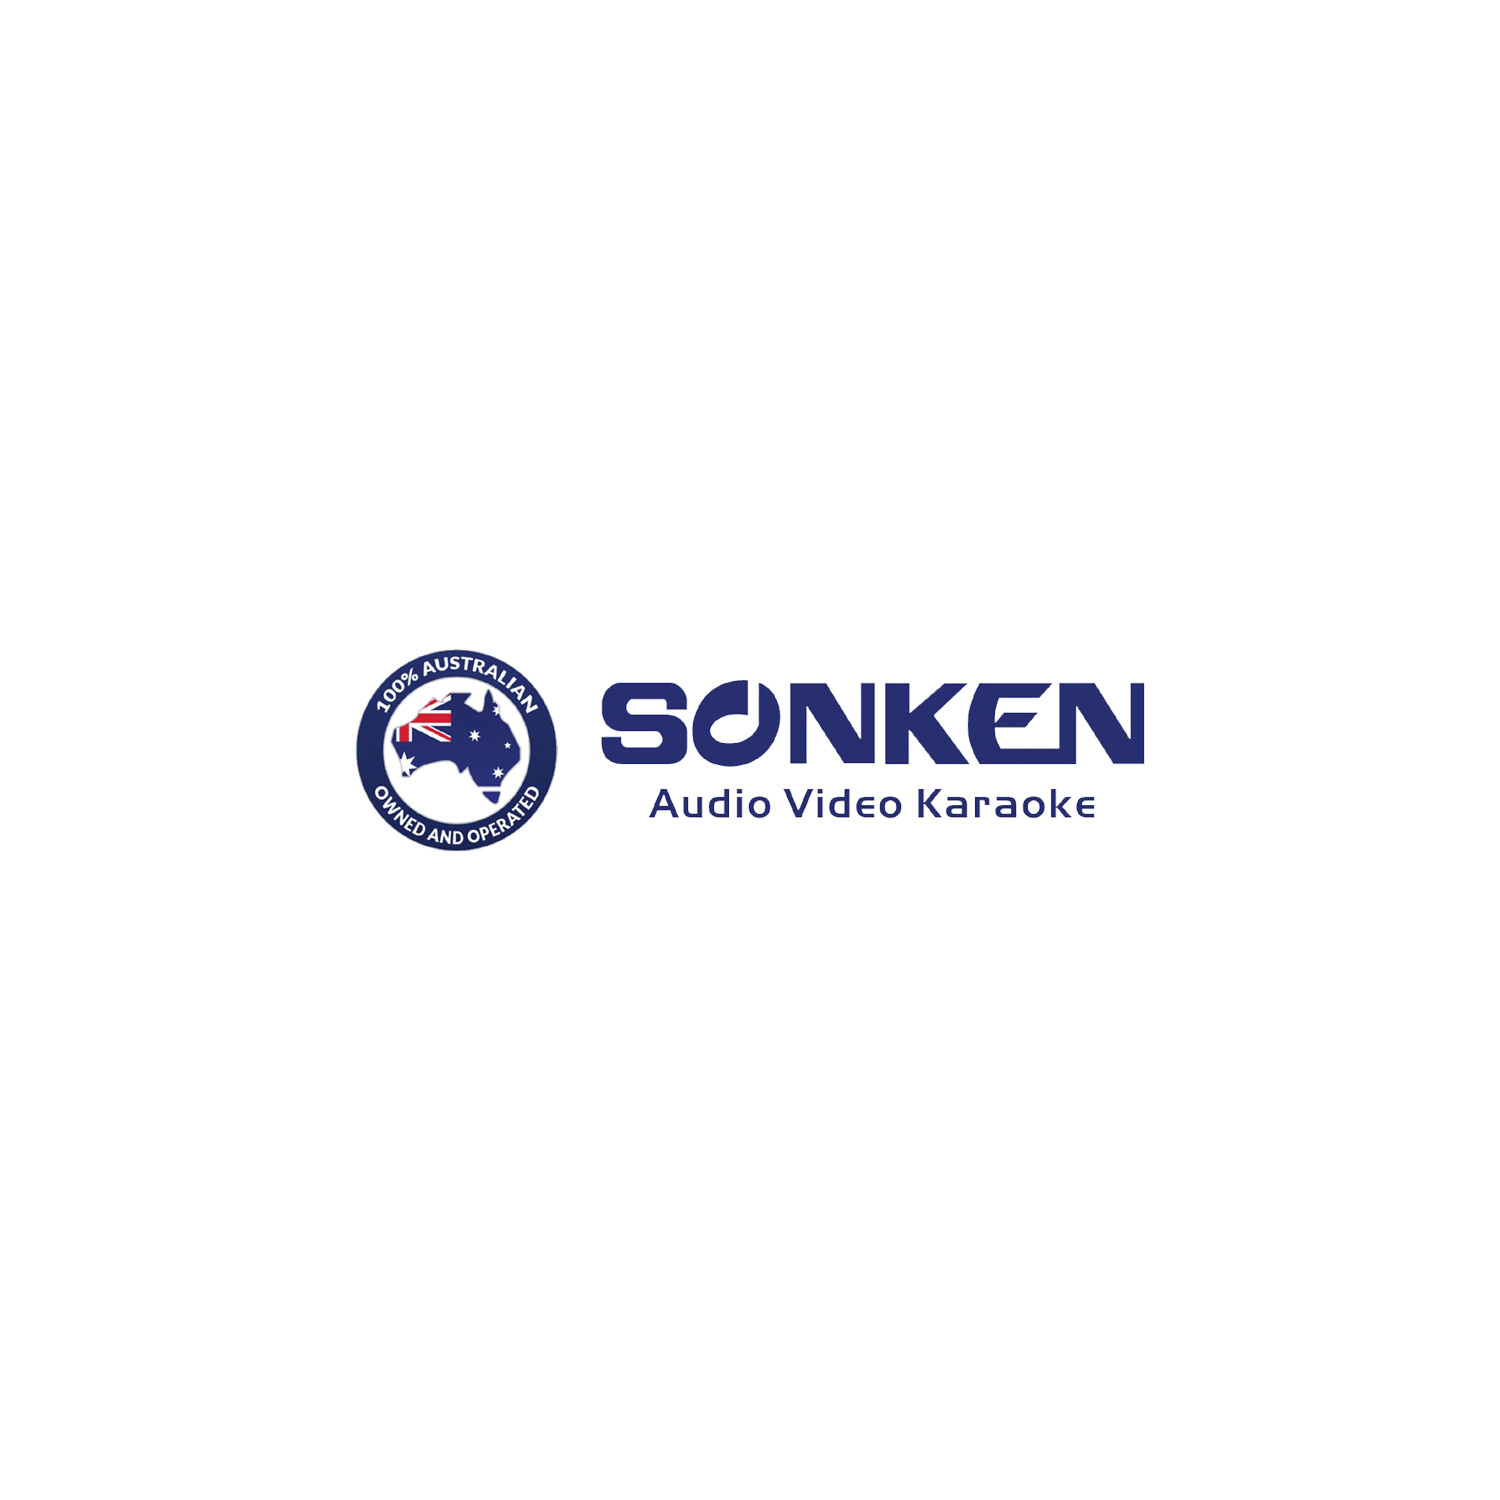 Sonken Australia - Karaoke Home Entertainment